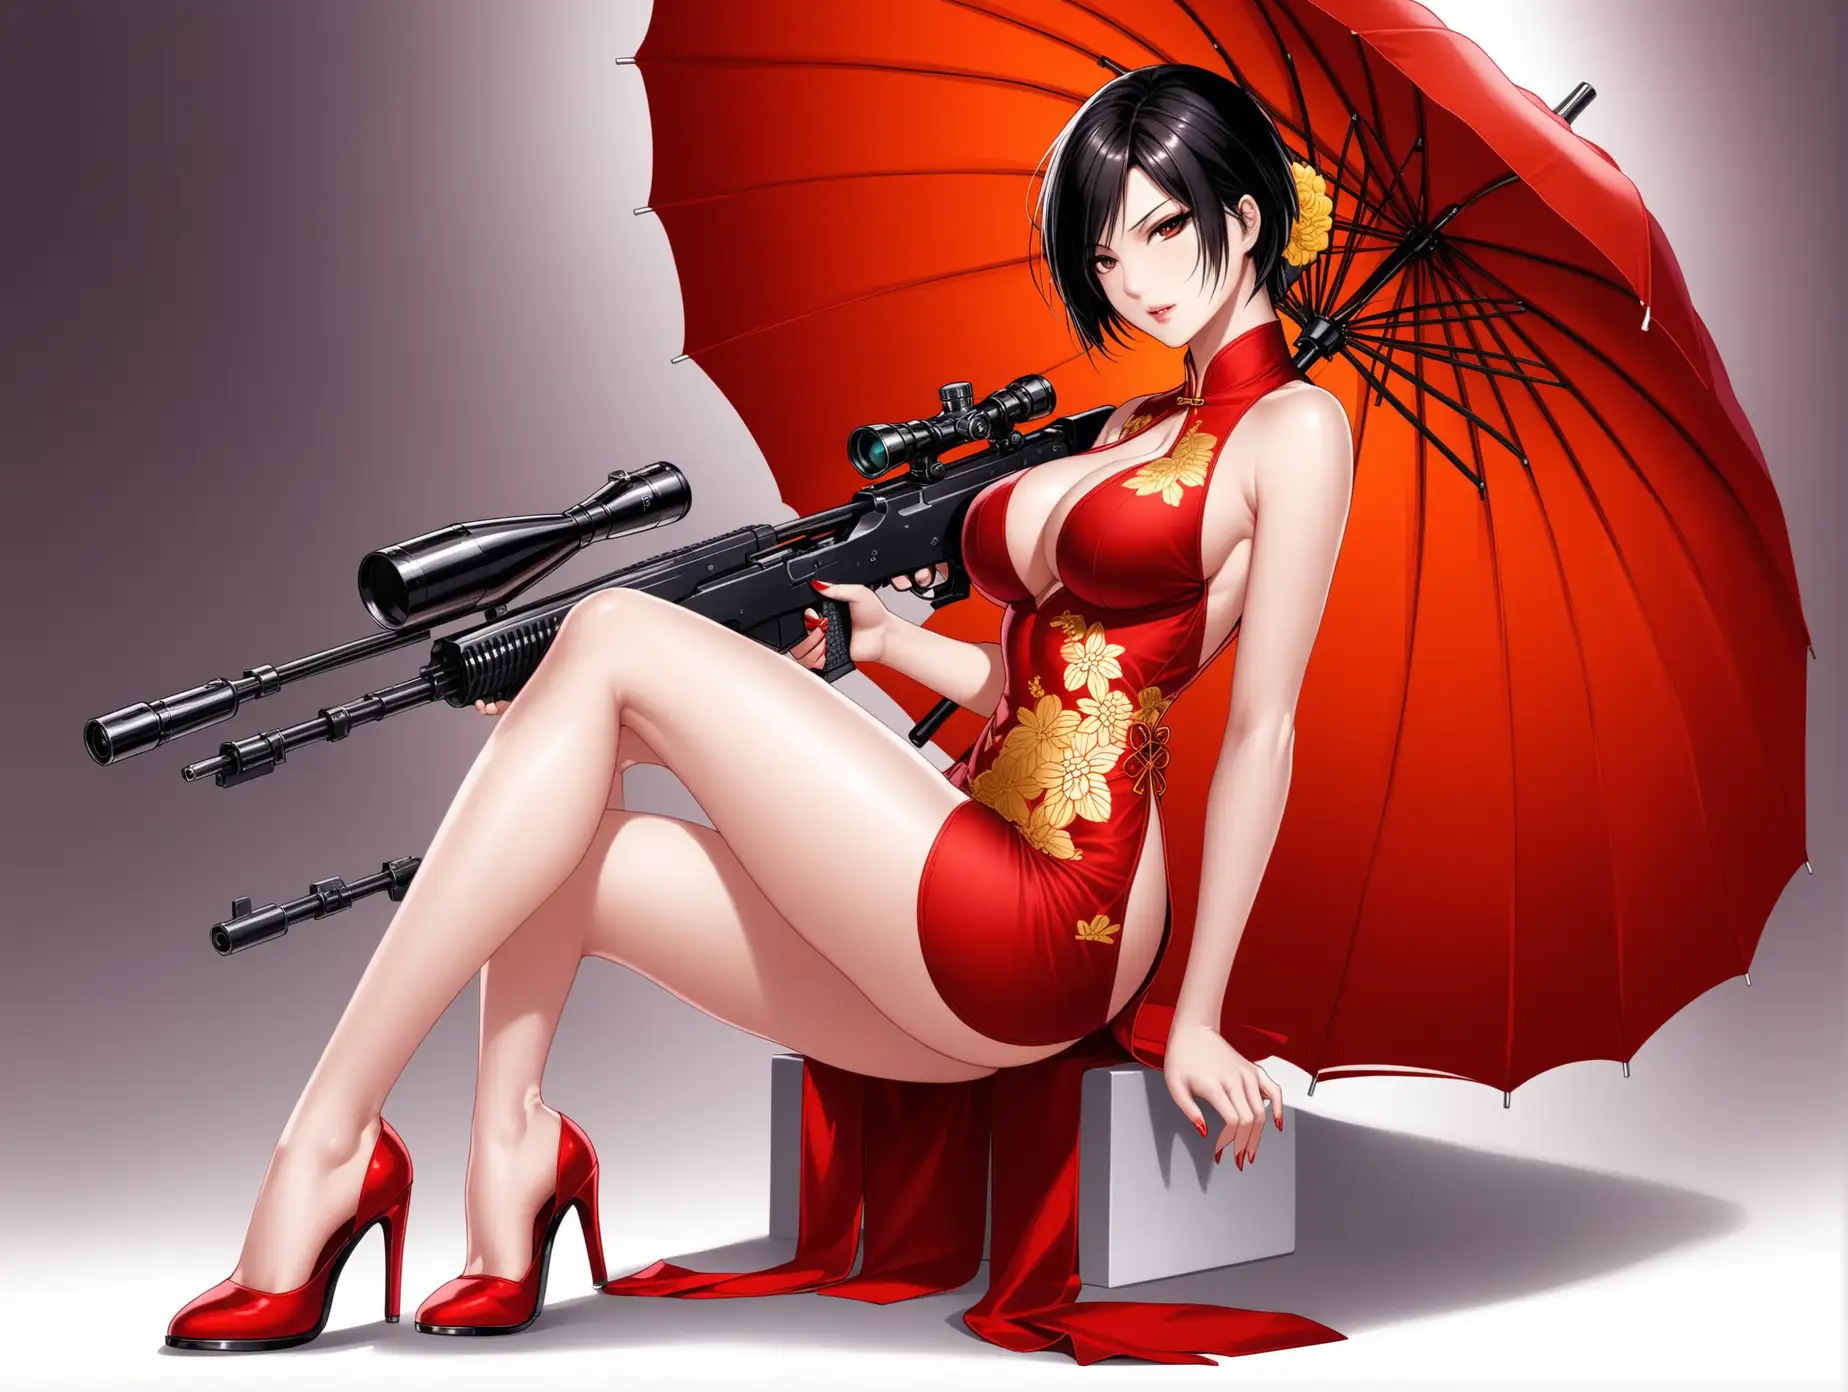 Ada-Wong-Cosplay-in-Red-Cheongsam-with-Sniper-Gun